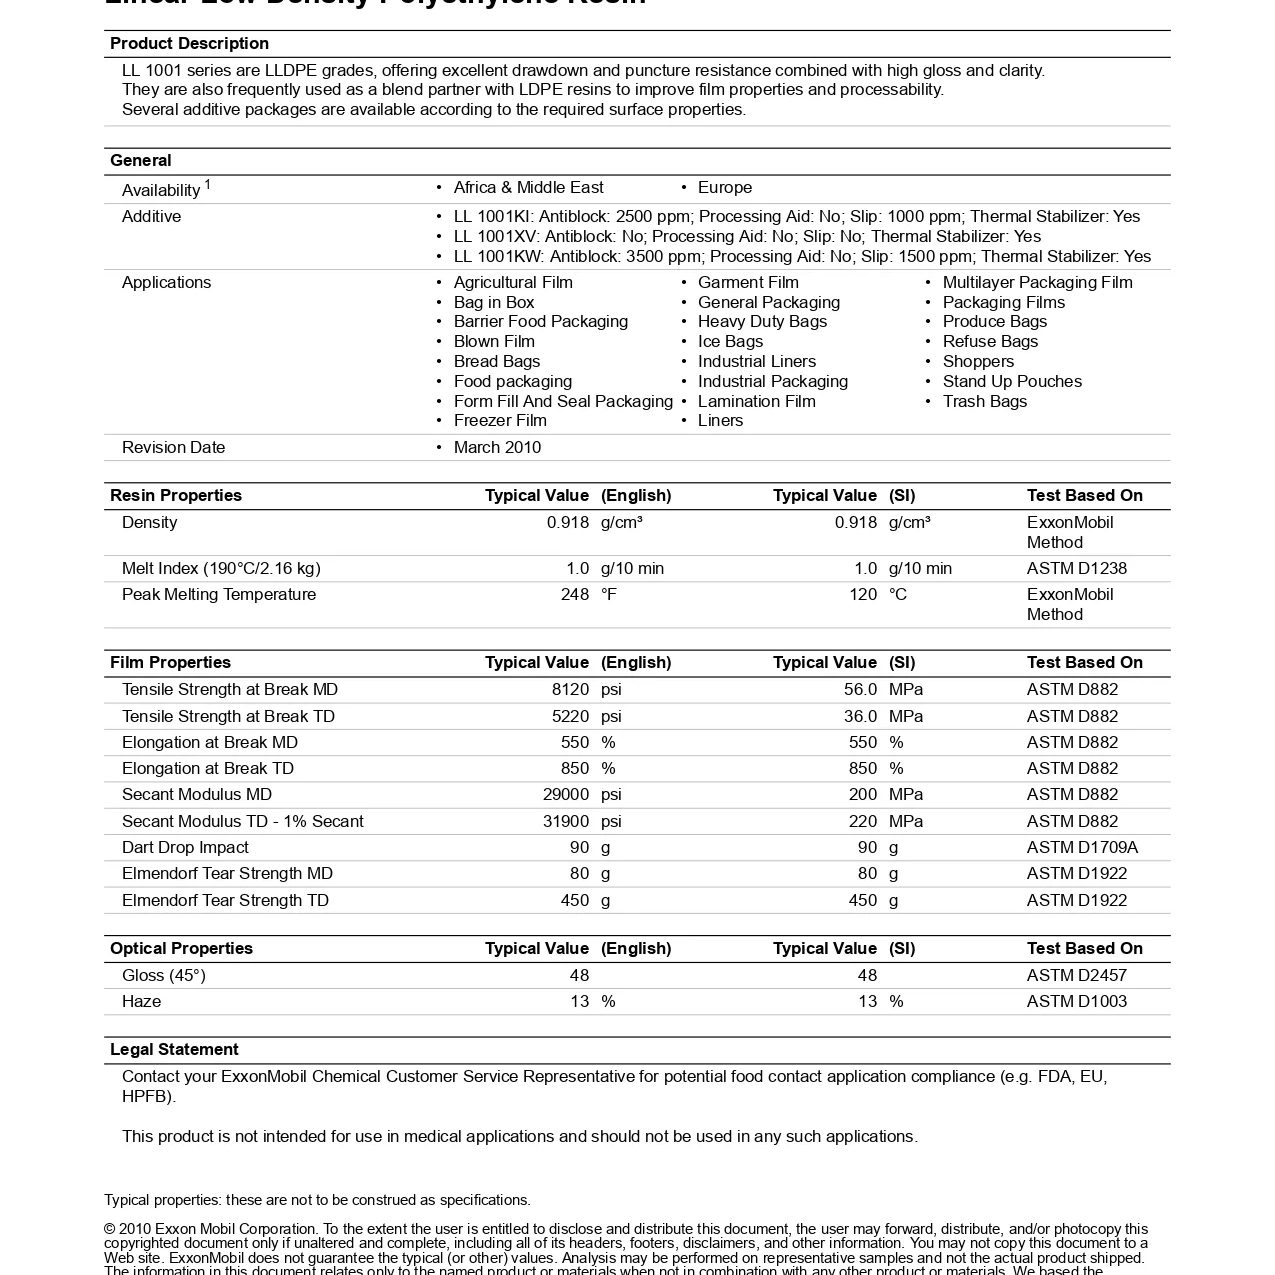 ExxonMobil 1001AY data sheet globexvn.com